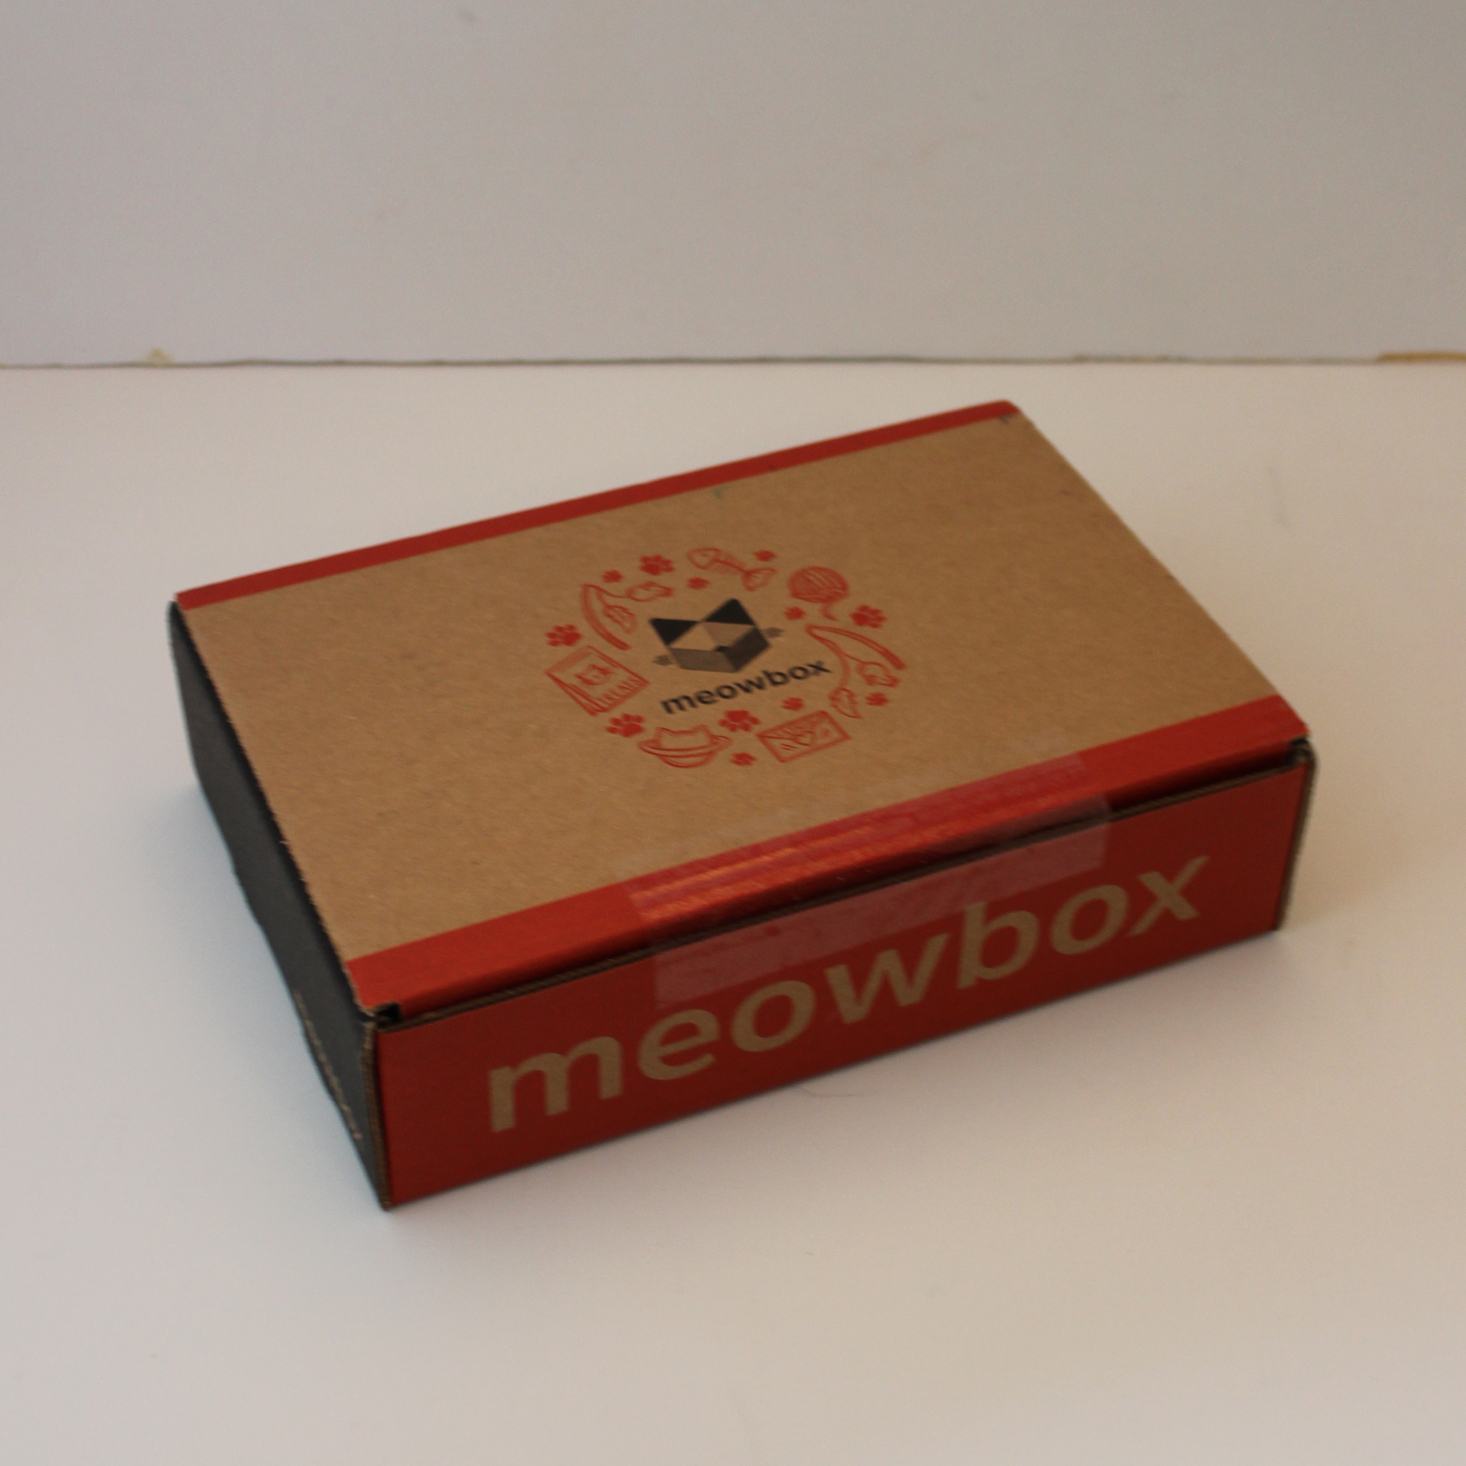 Meowbox November 2019 Box